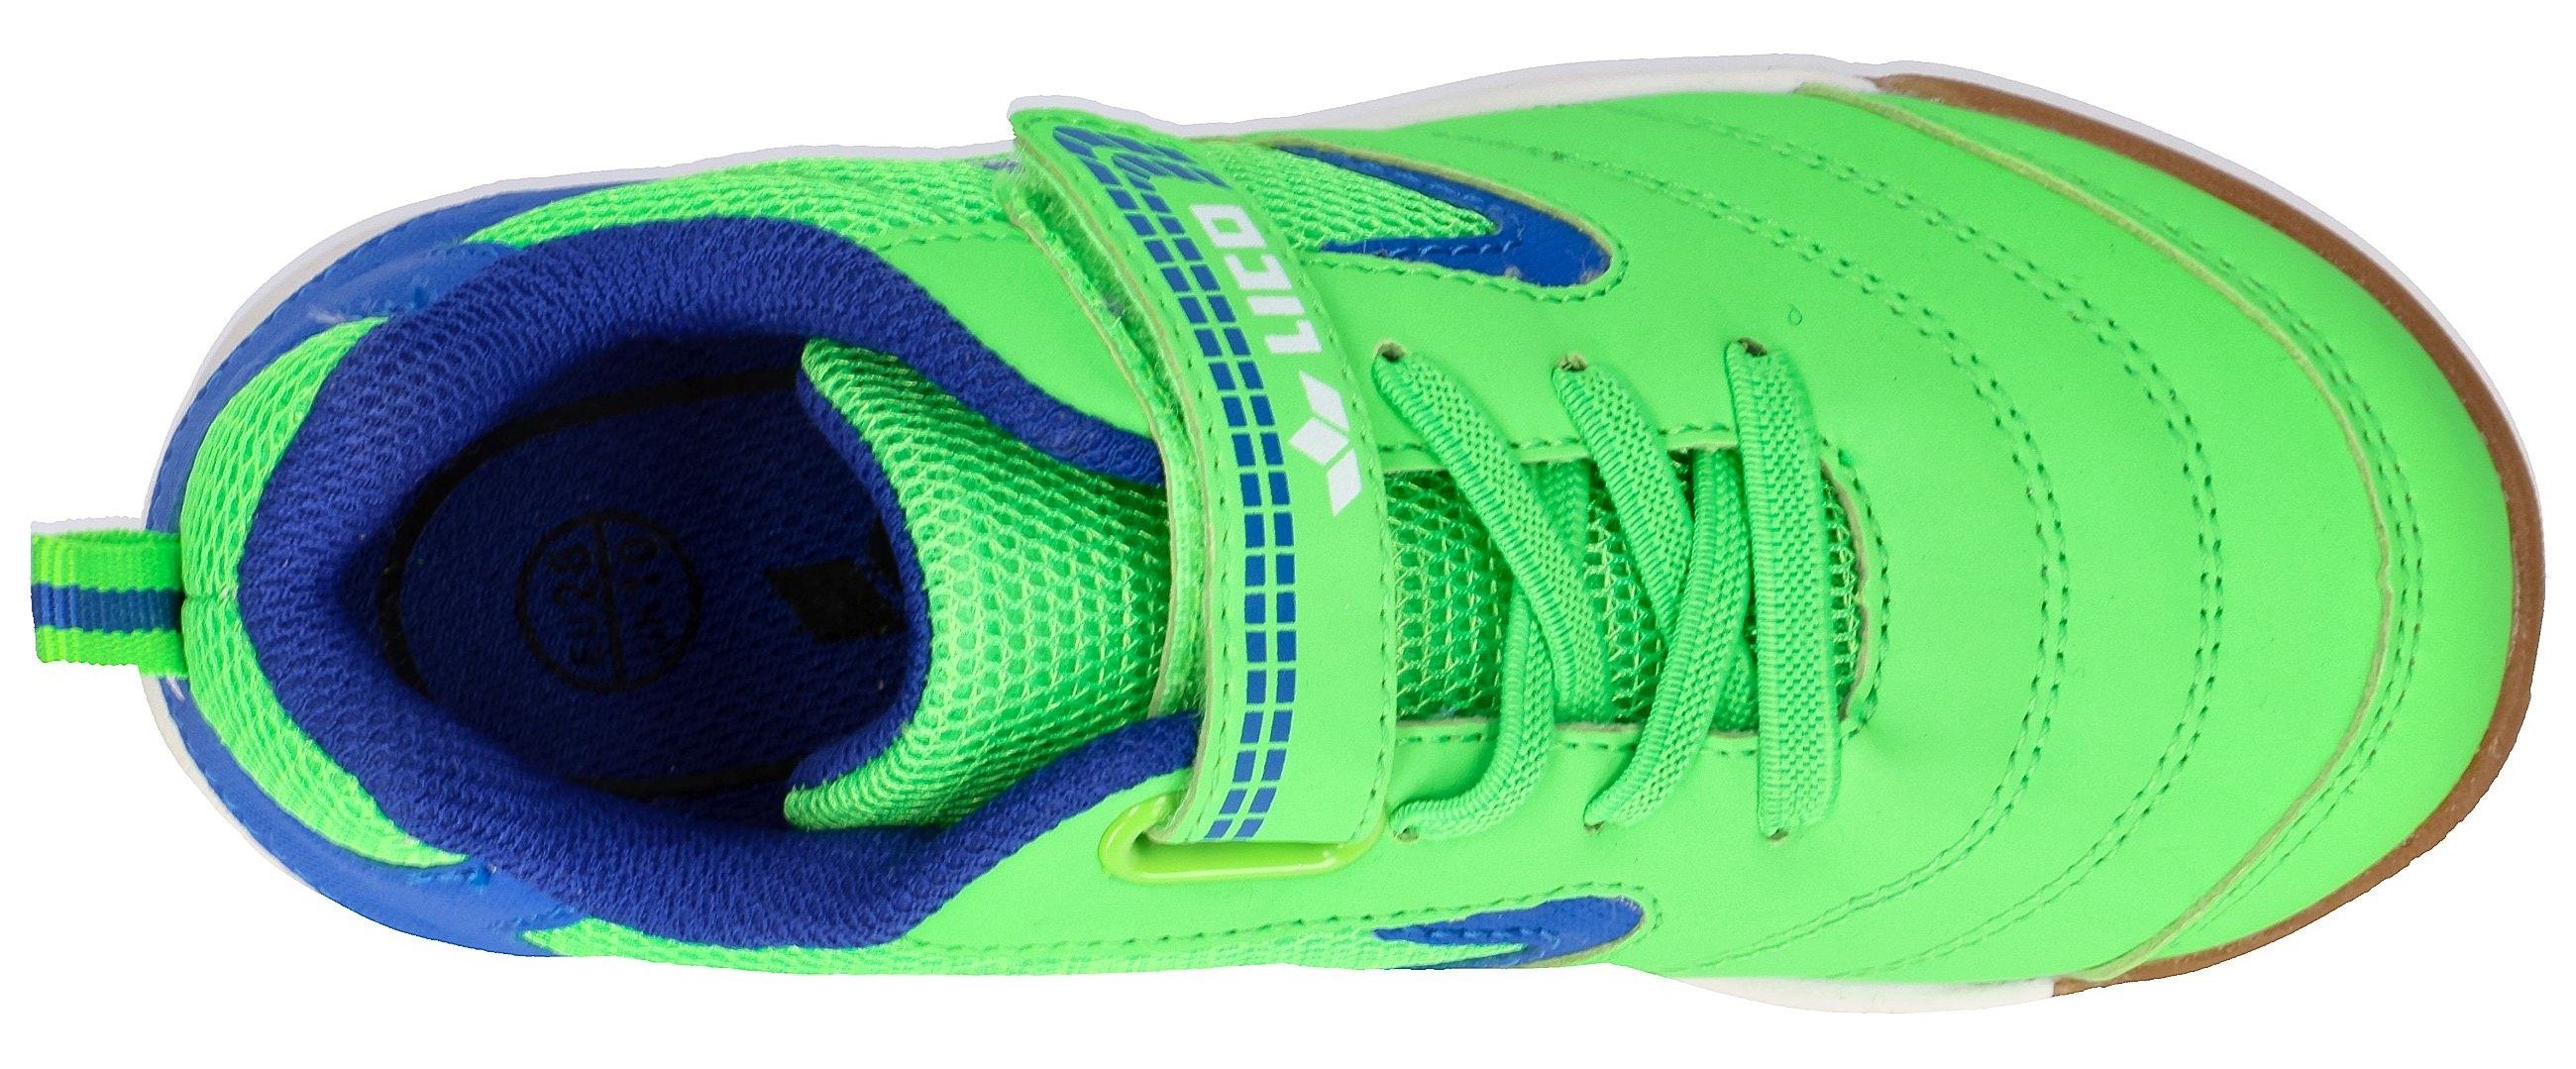 mit Ari VS WMS Laufsohle grün-blau heller Sneaker Lico